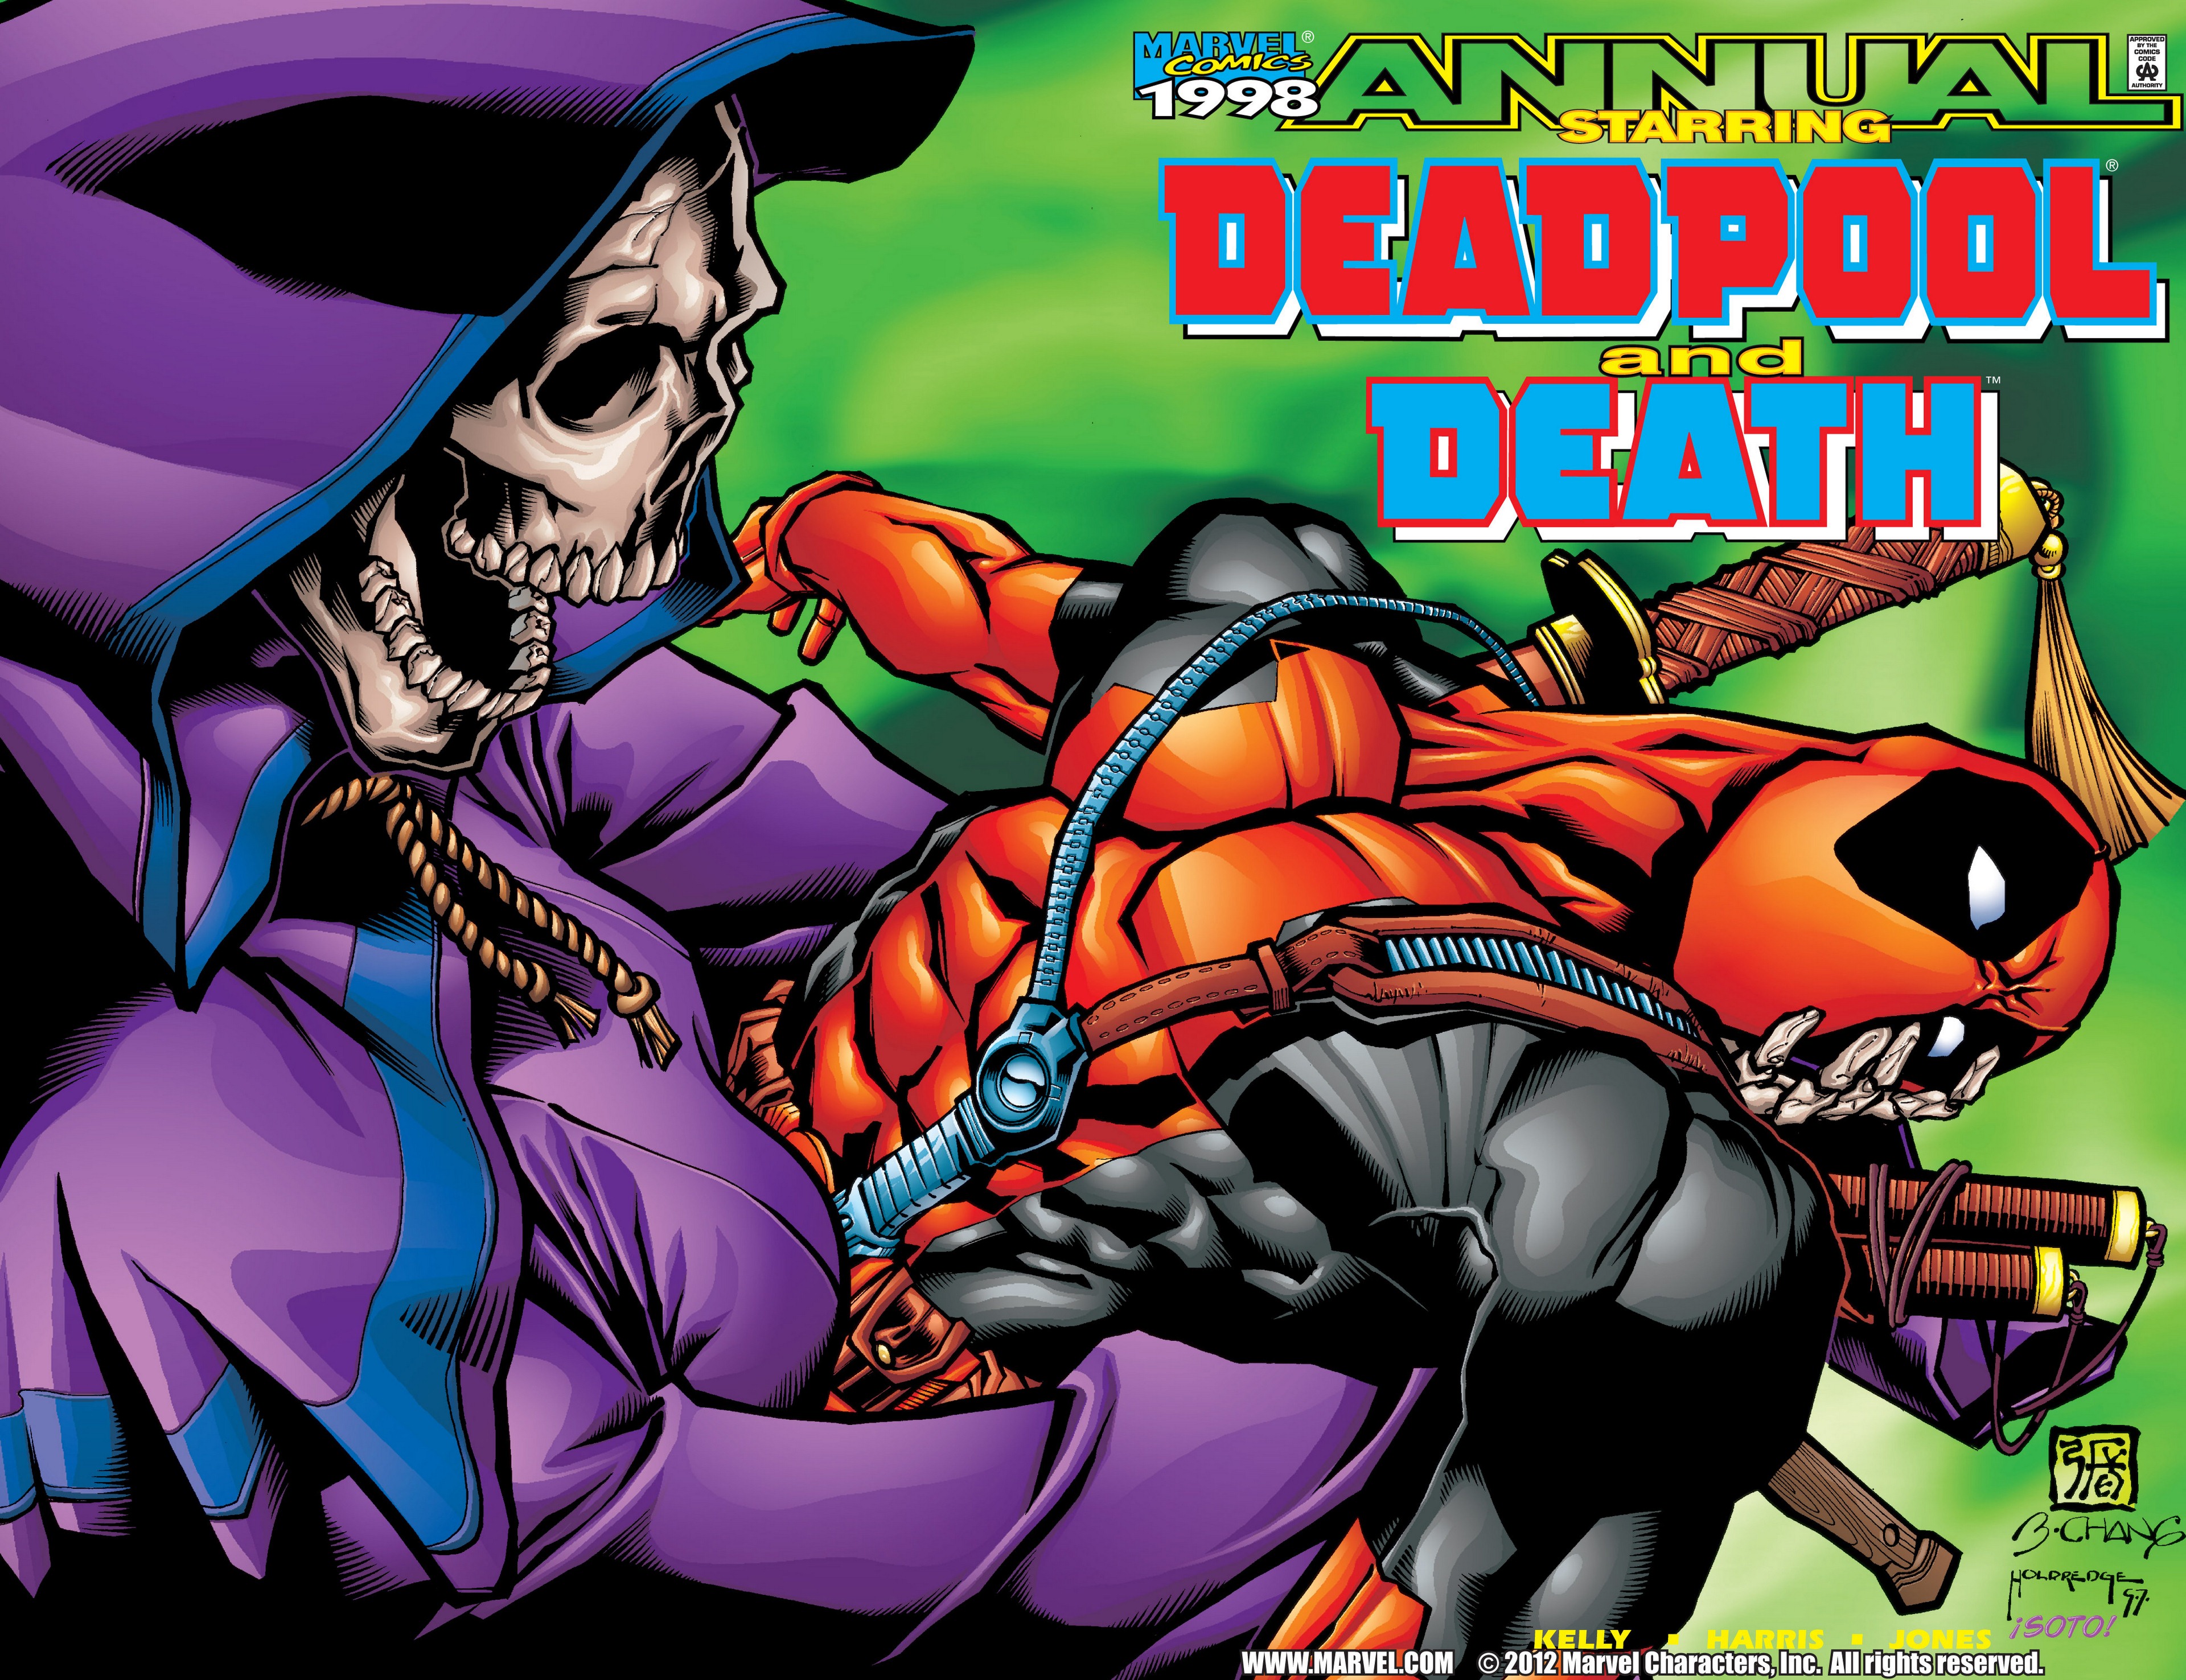 Deadpool Death 98 Full | Read Deadpool Death 98 Full comic online in high  quality. Read Full Comic online for free - Read comics online in high  quality .